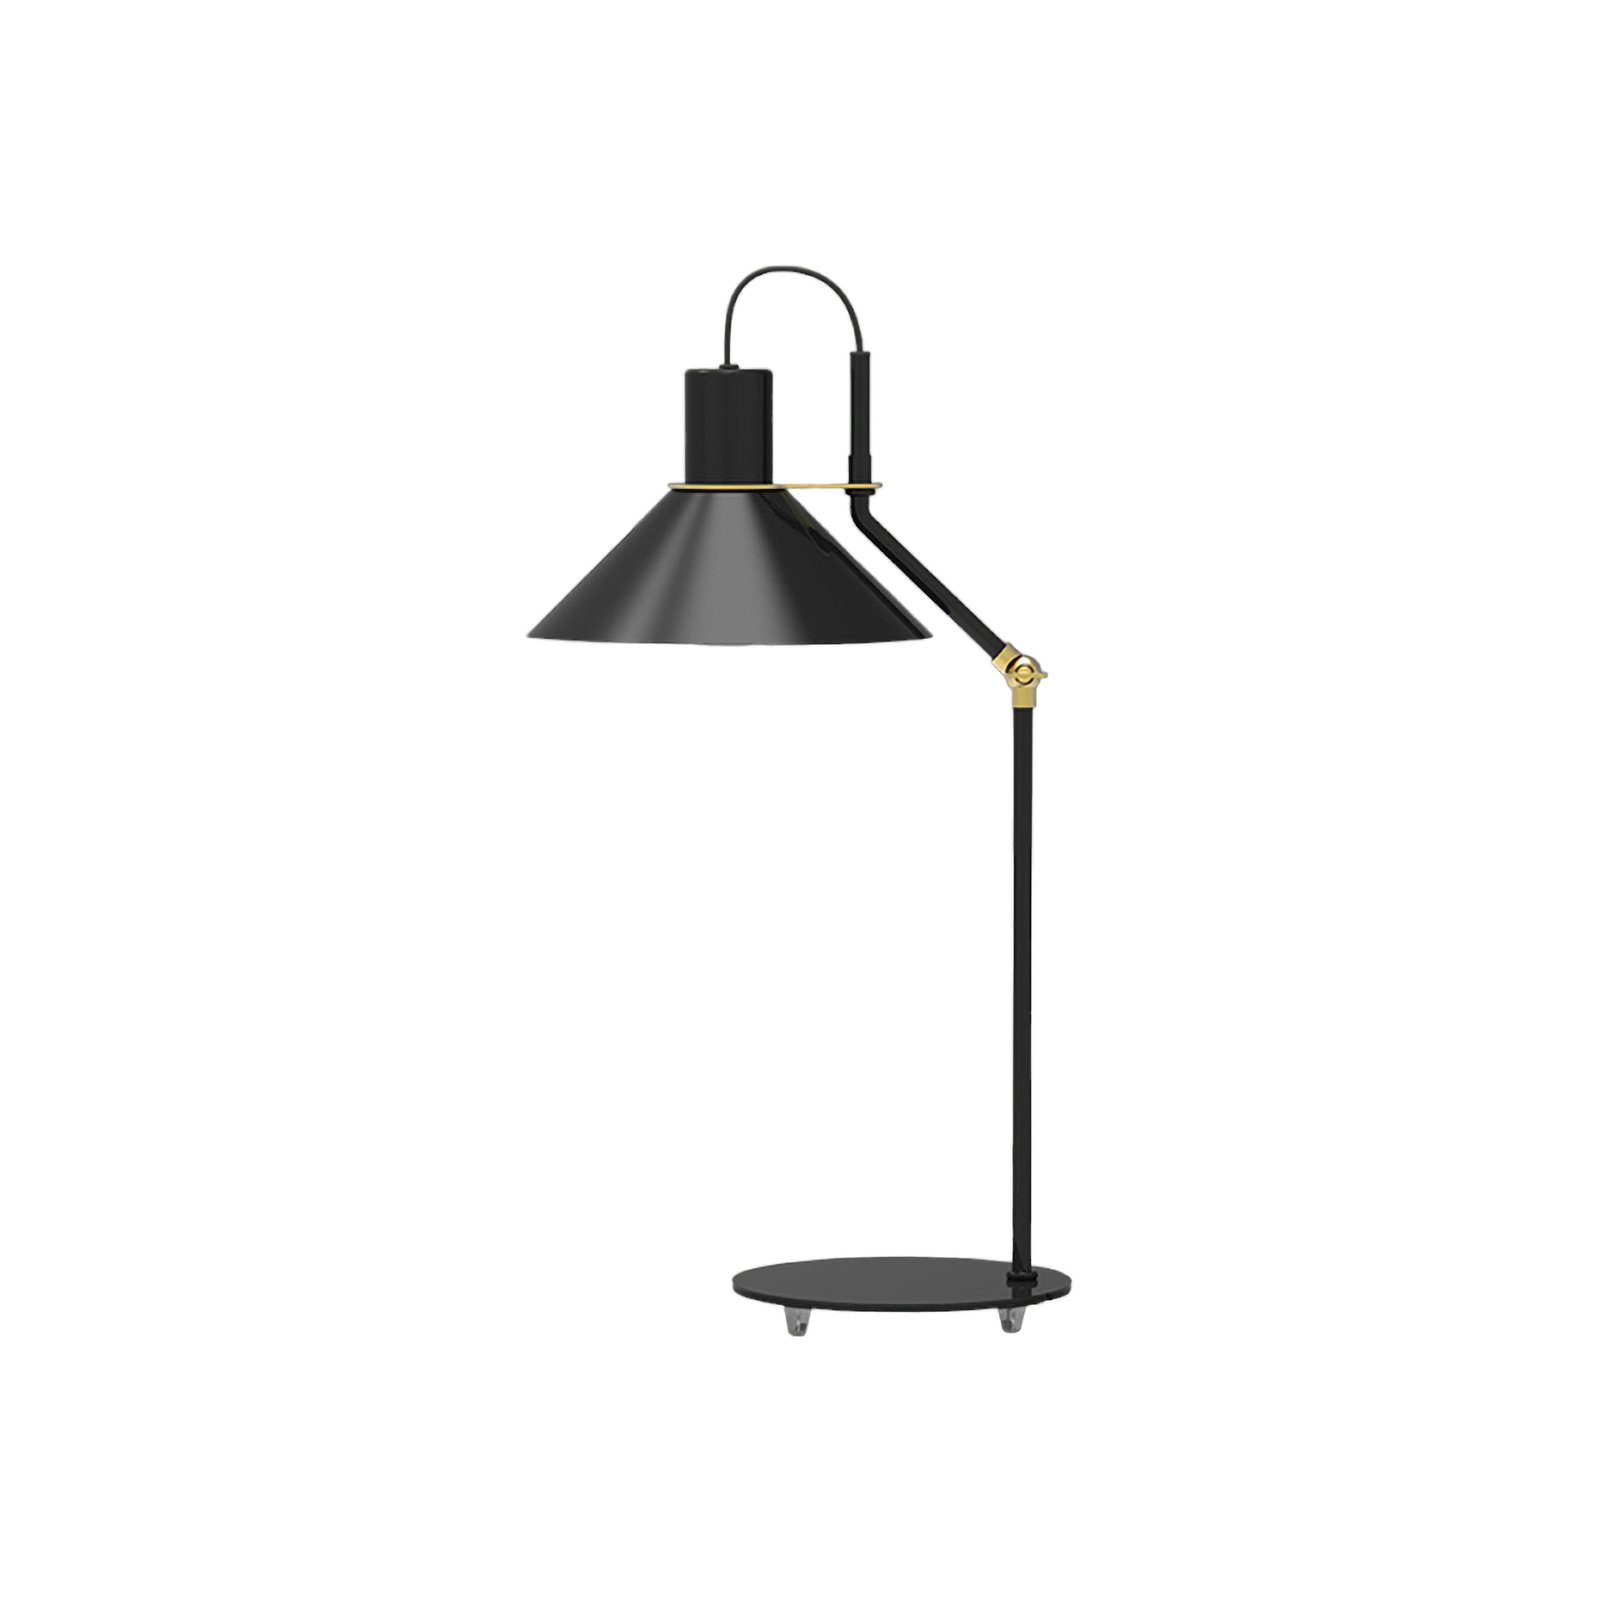 Aluminor Zinga tafellamp, zwart, messingdetail